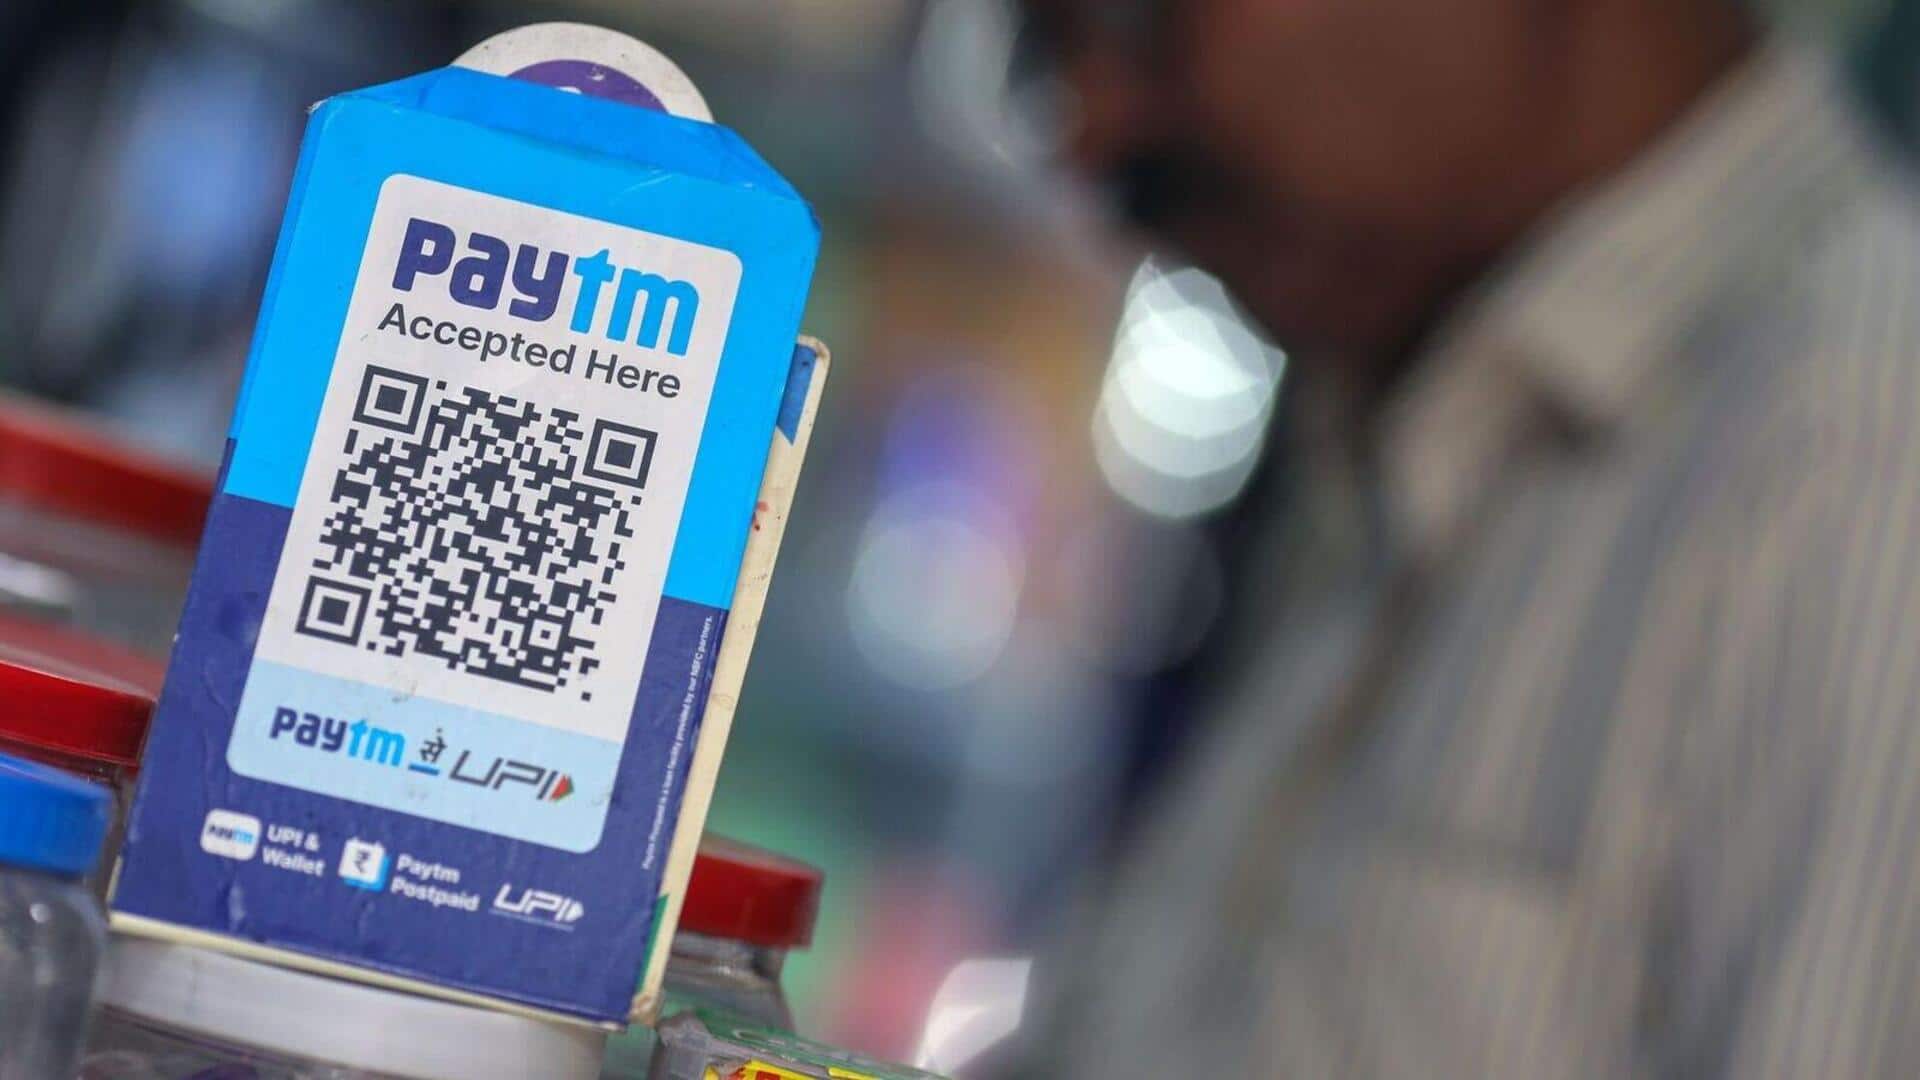 Paytm to restart lending platform operations in India next month